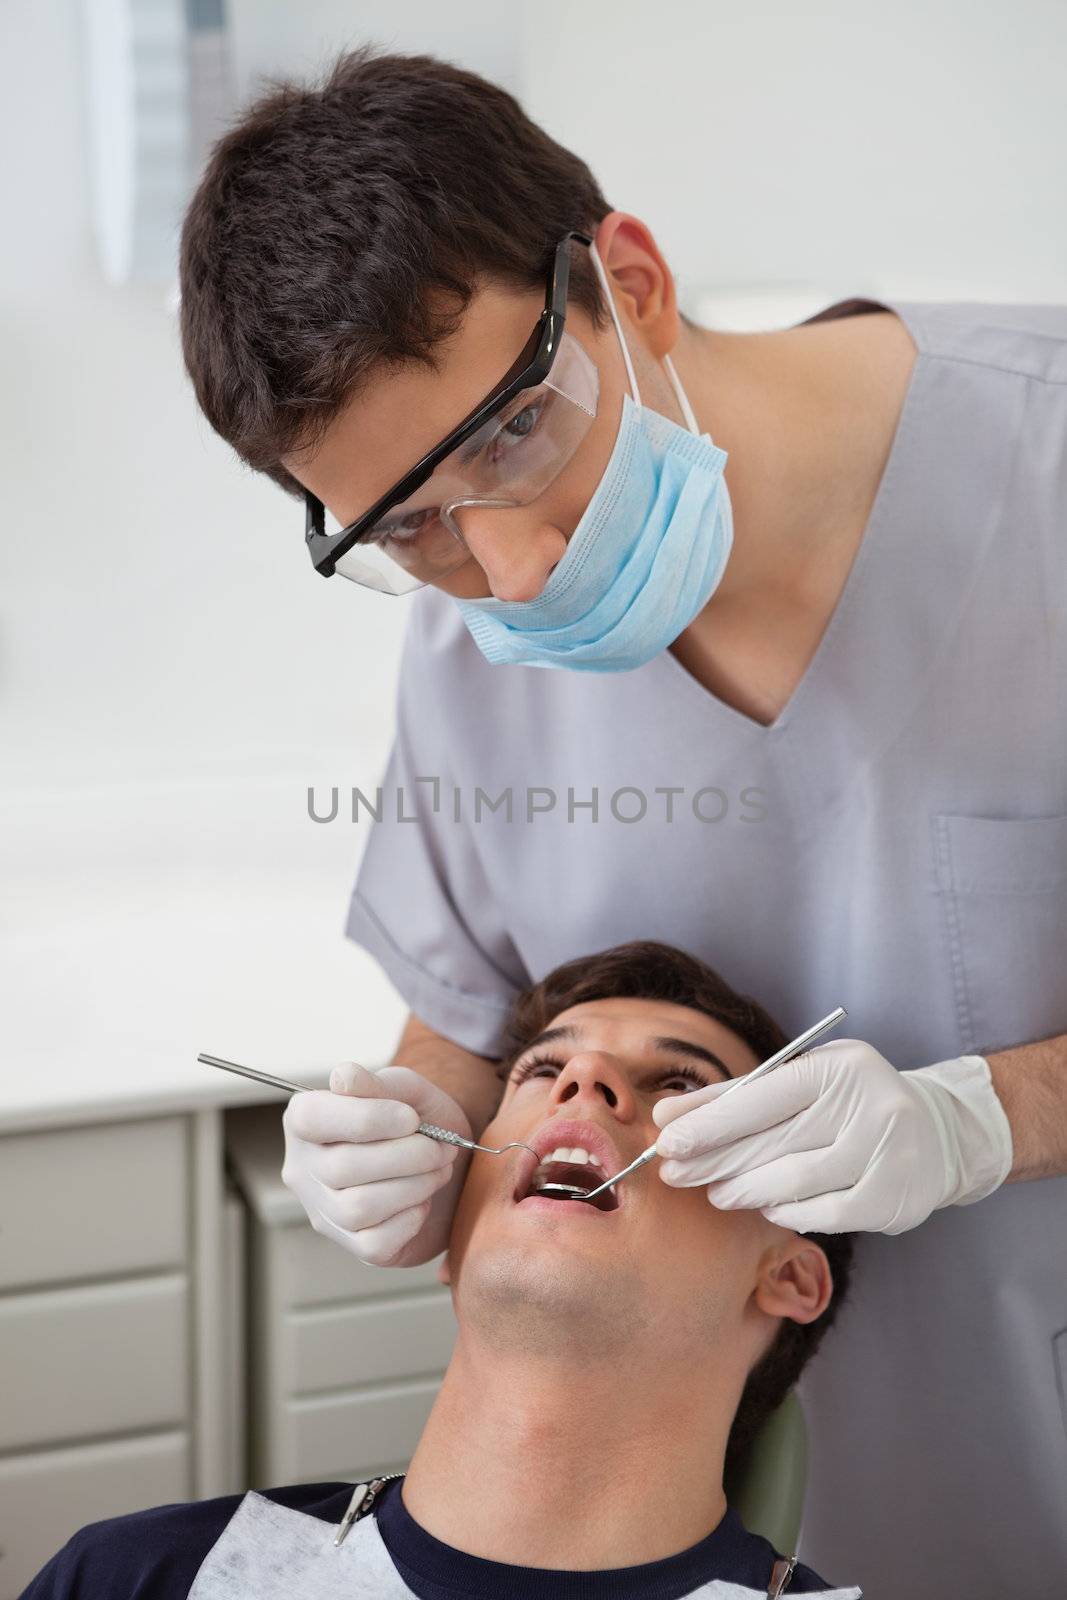 Dentist examining patient's teeth by leaf